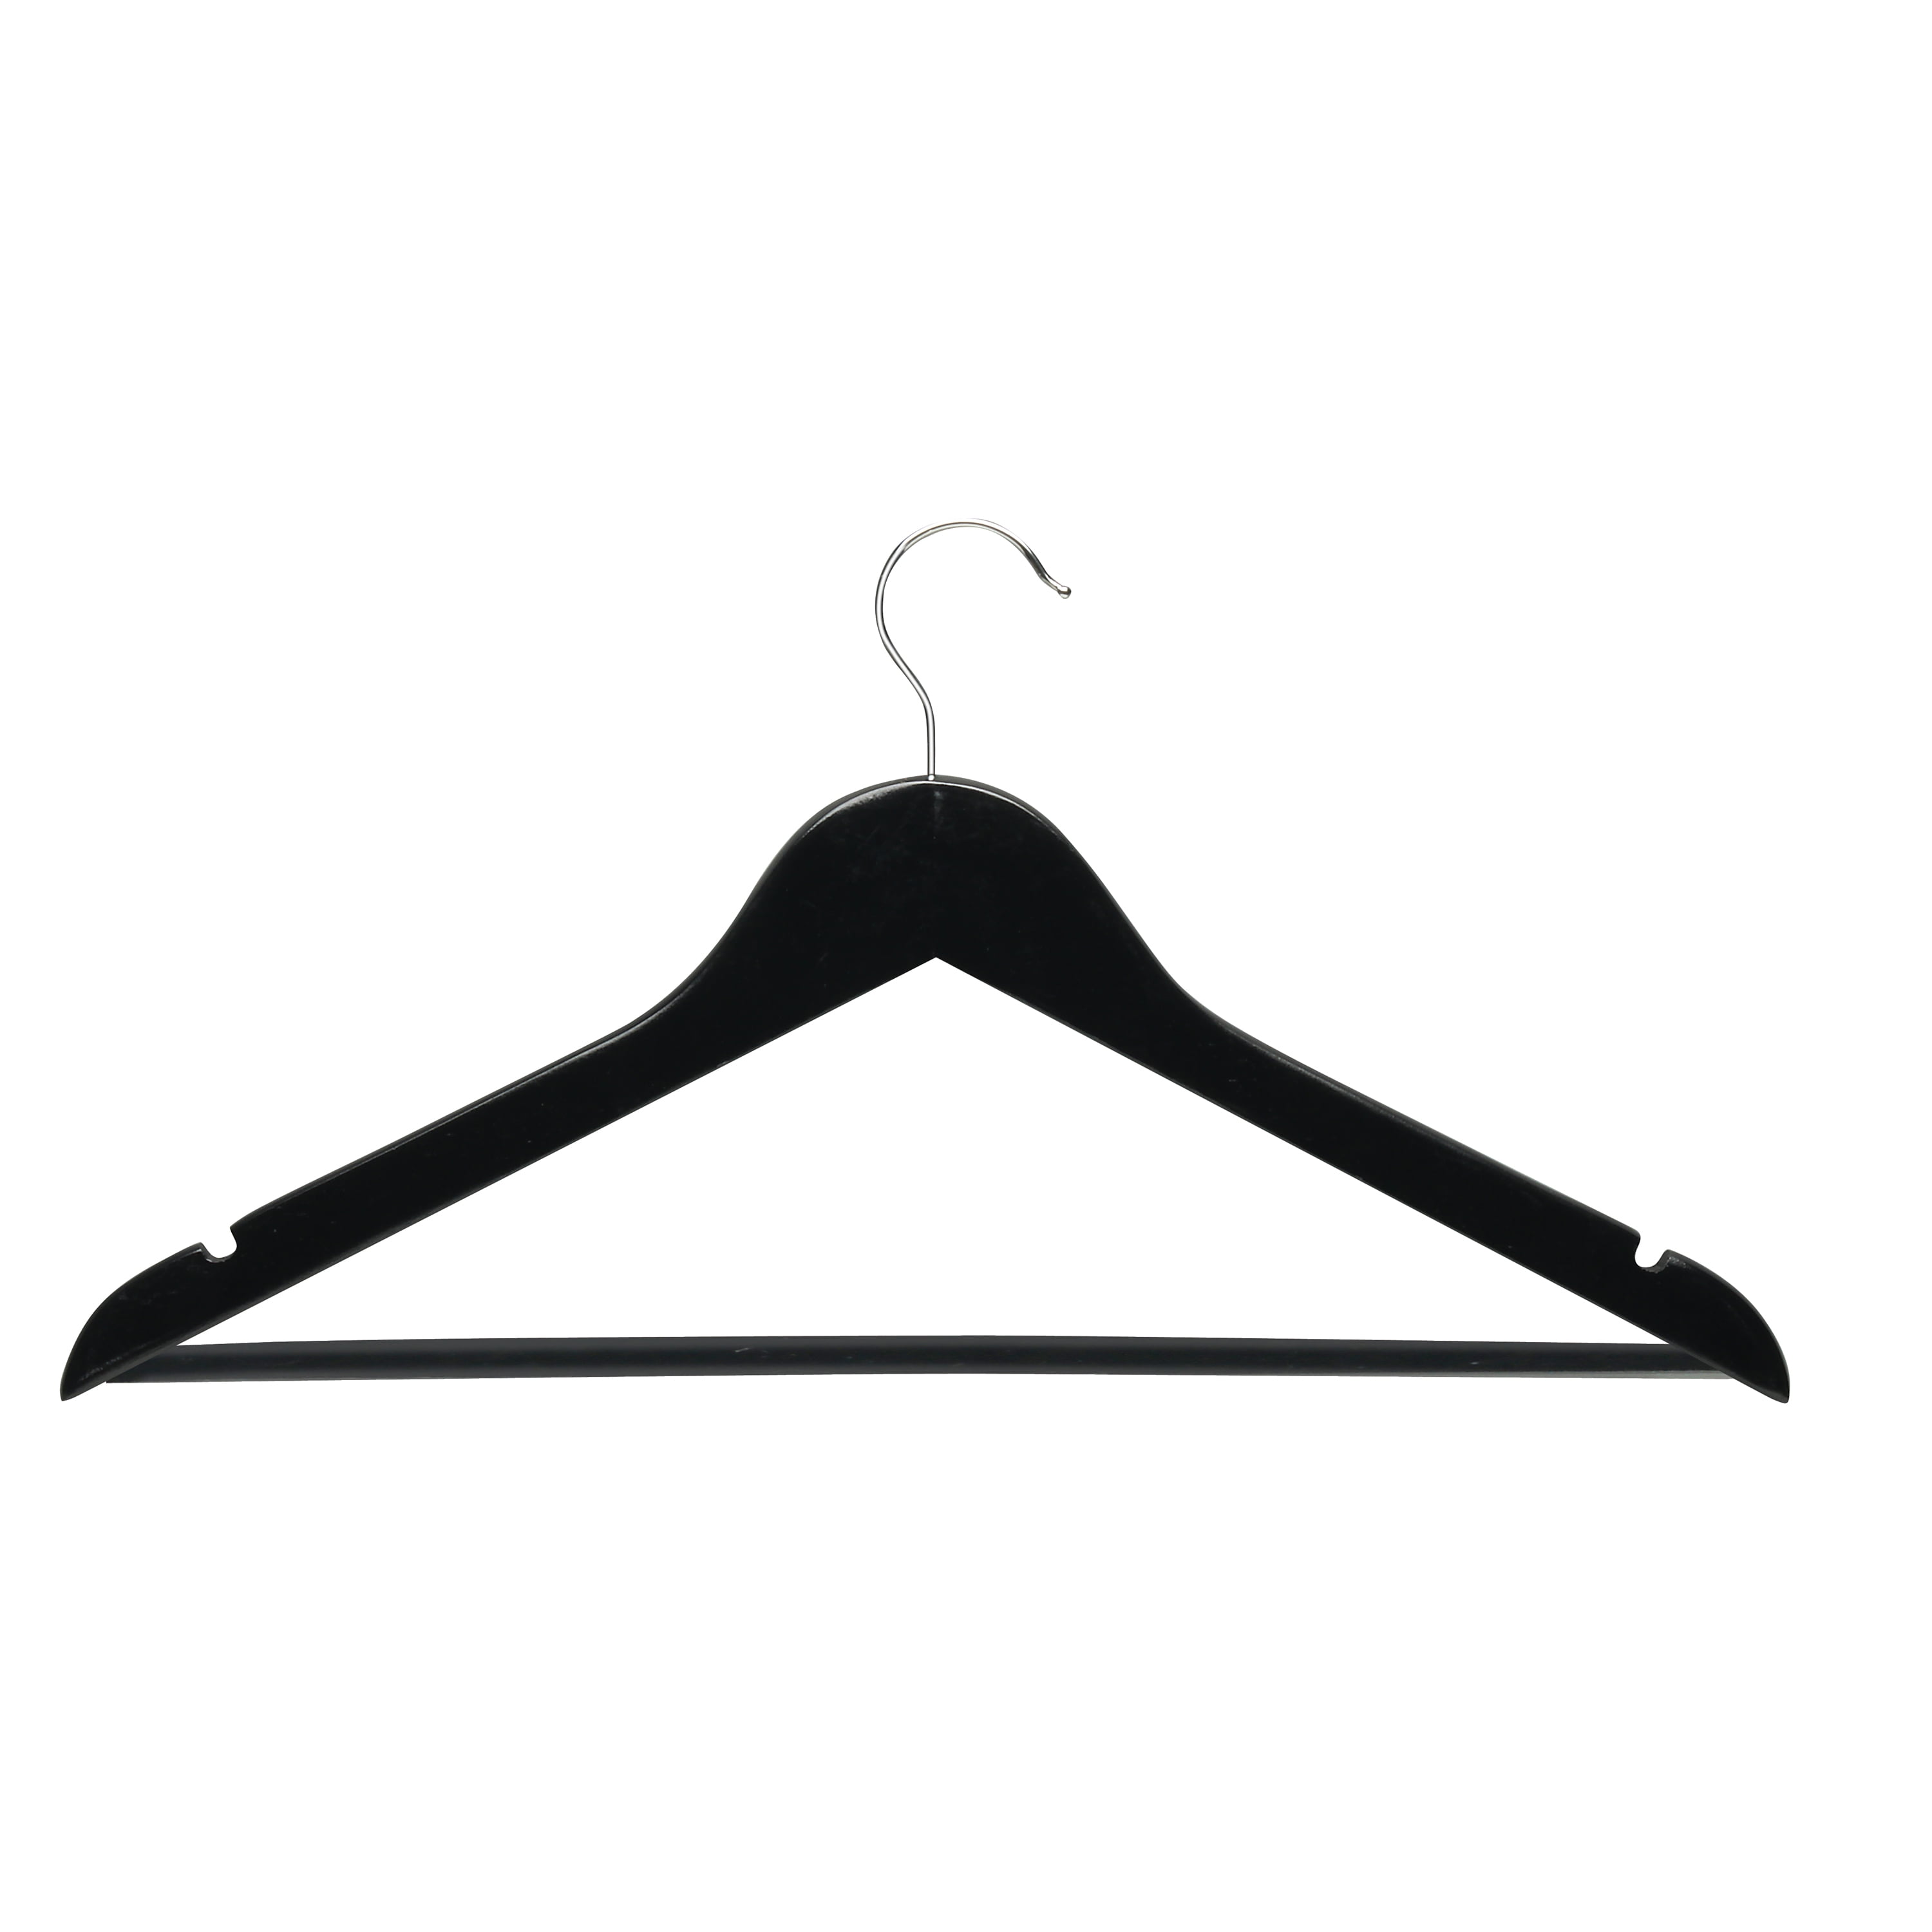 Black Wooden Contoured Suit Hangers with Notches, 8-Pack - Walmart.com ...